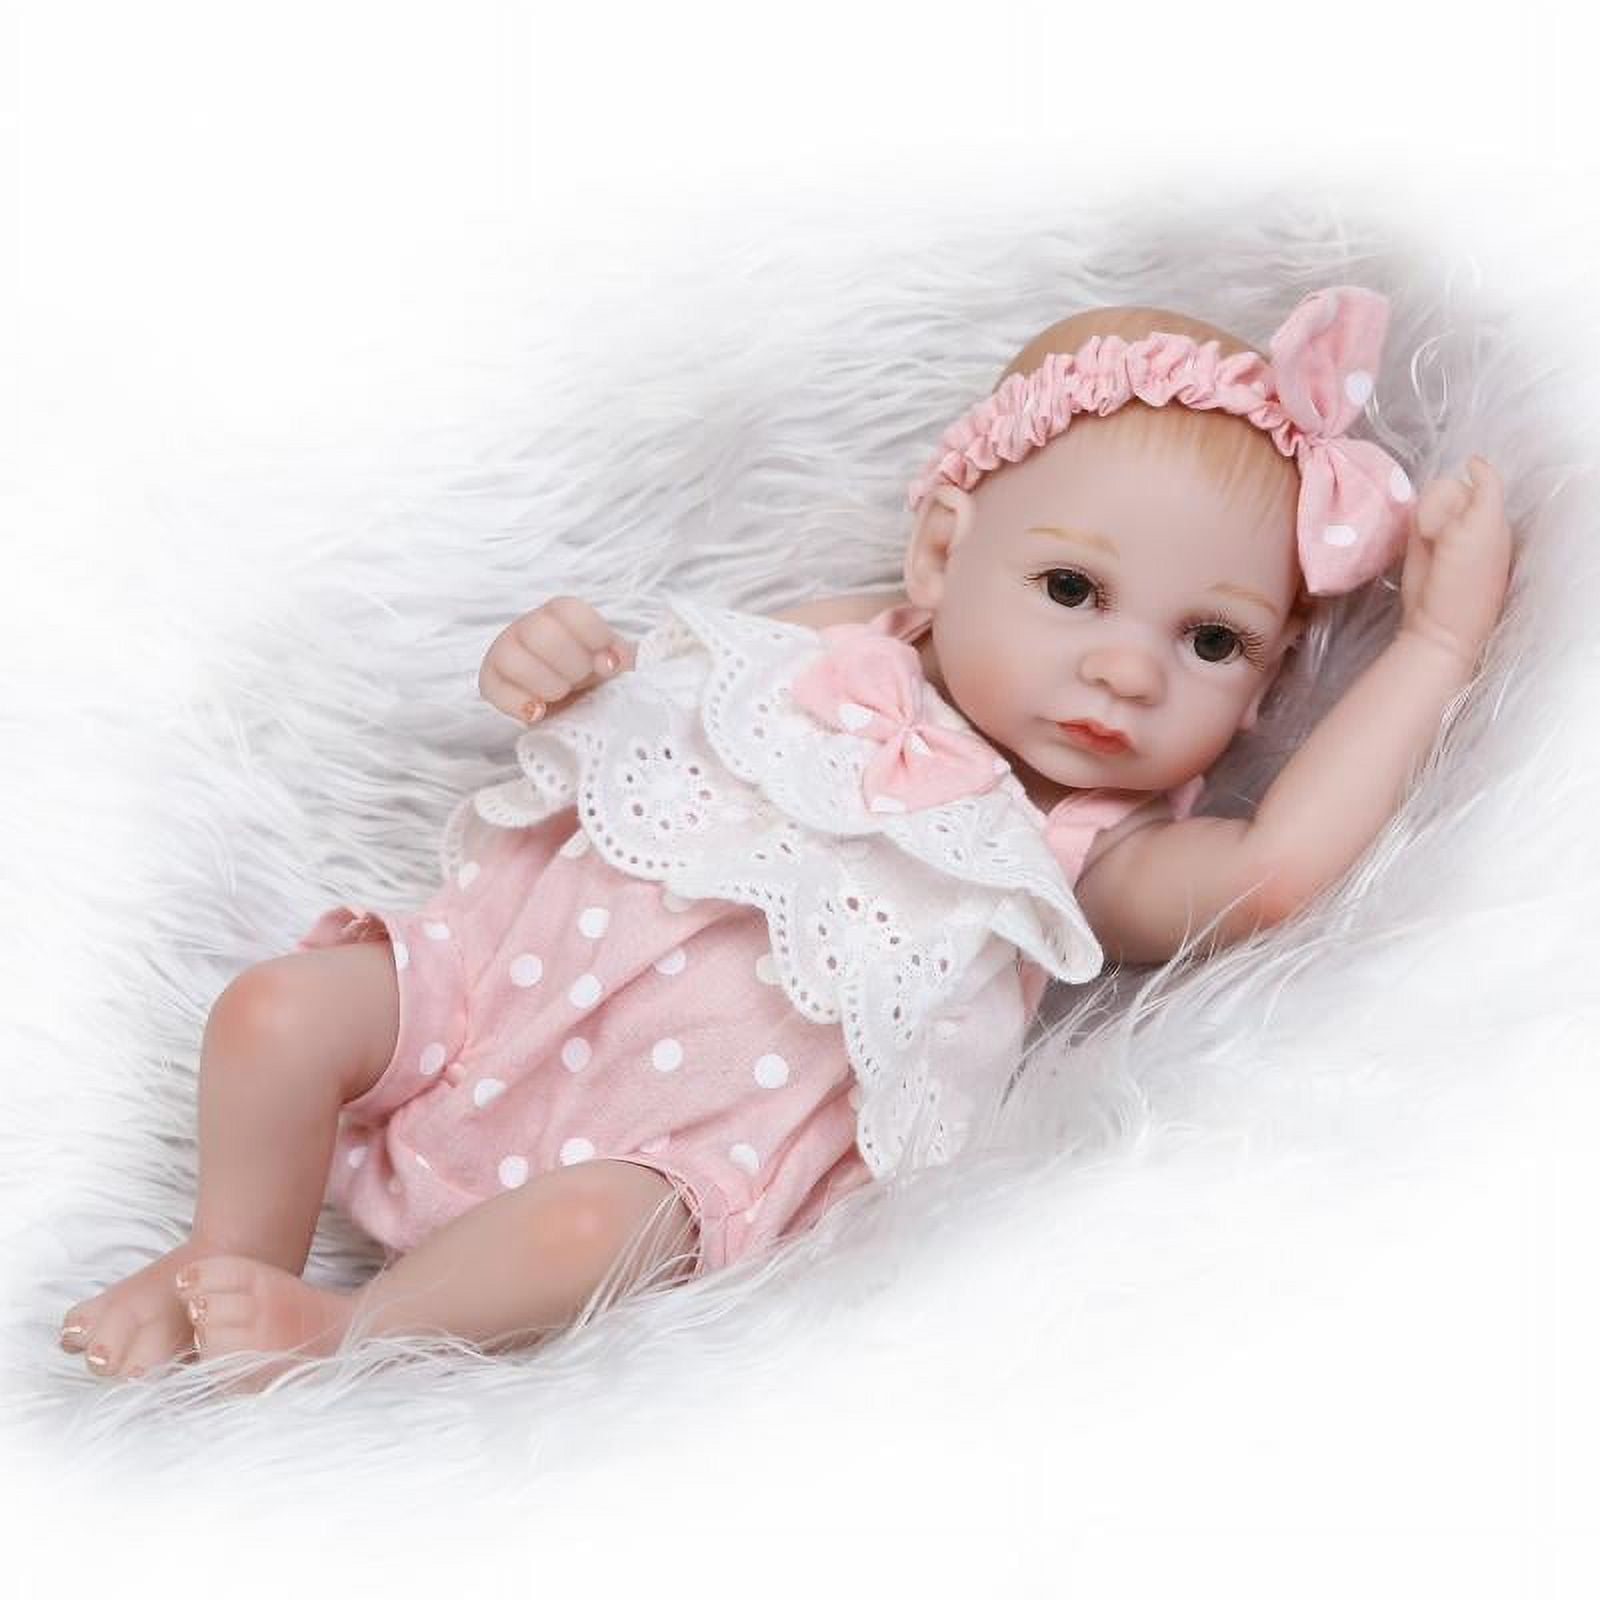 Miaio 14 Reborn Baby Dolls, Full Silicone Baby Dolls, Realistic